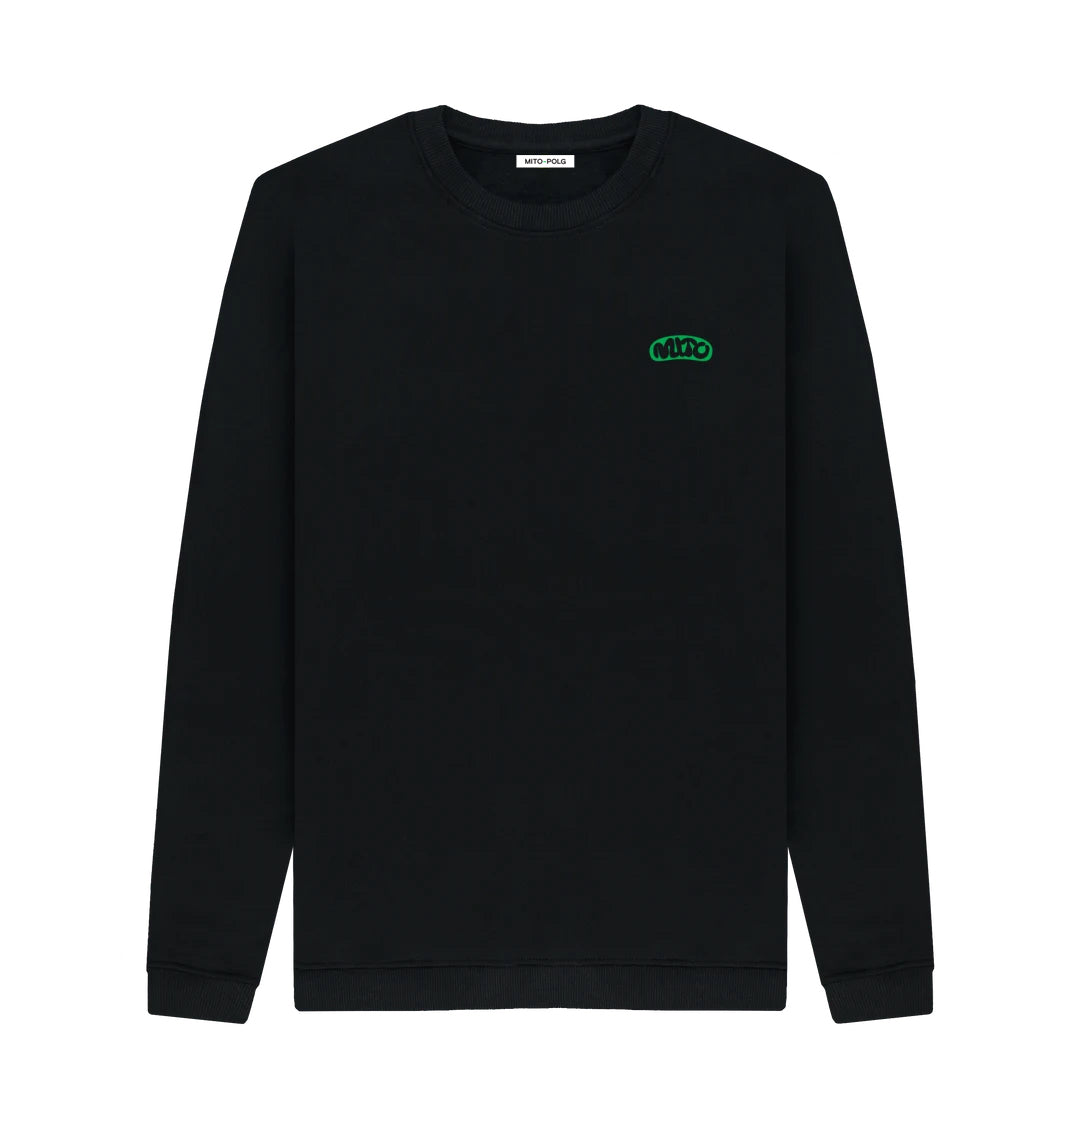 Black Embroidered MITO Crewneck Sweatshirt